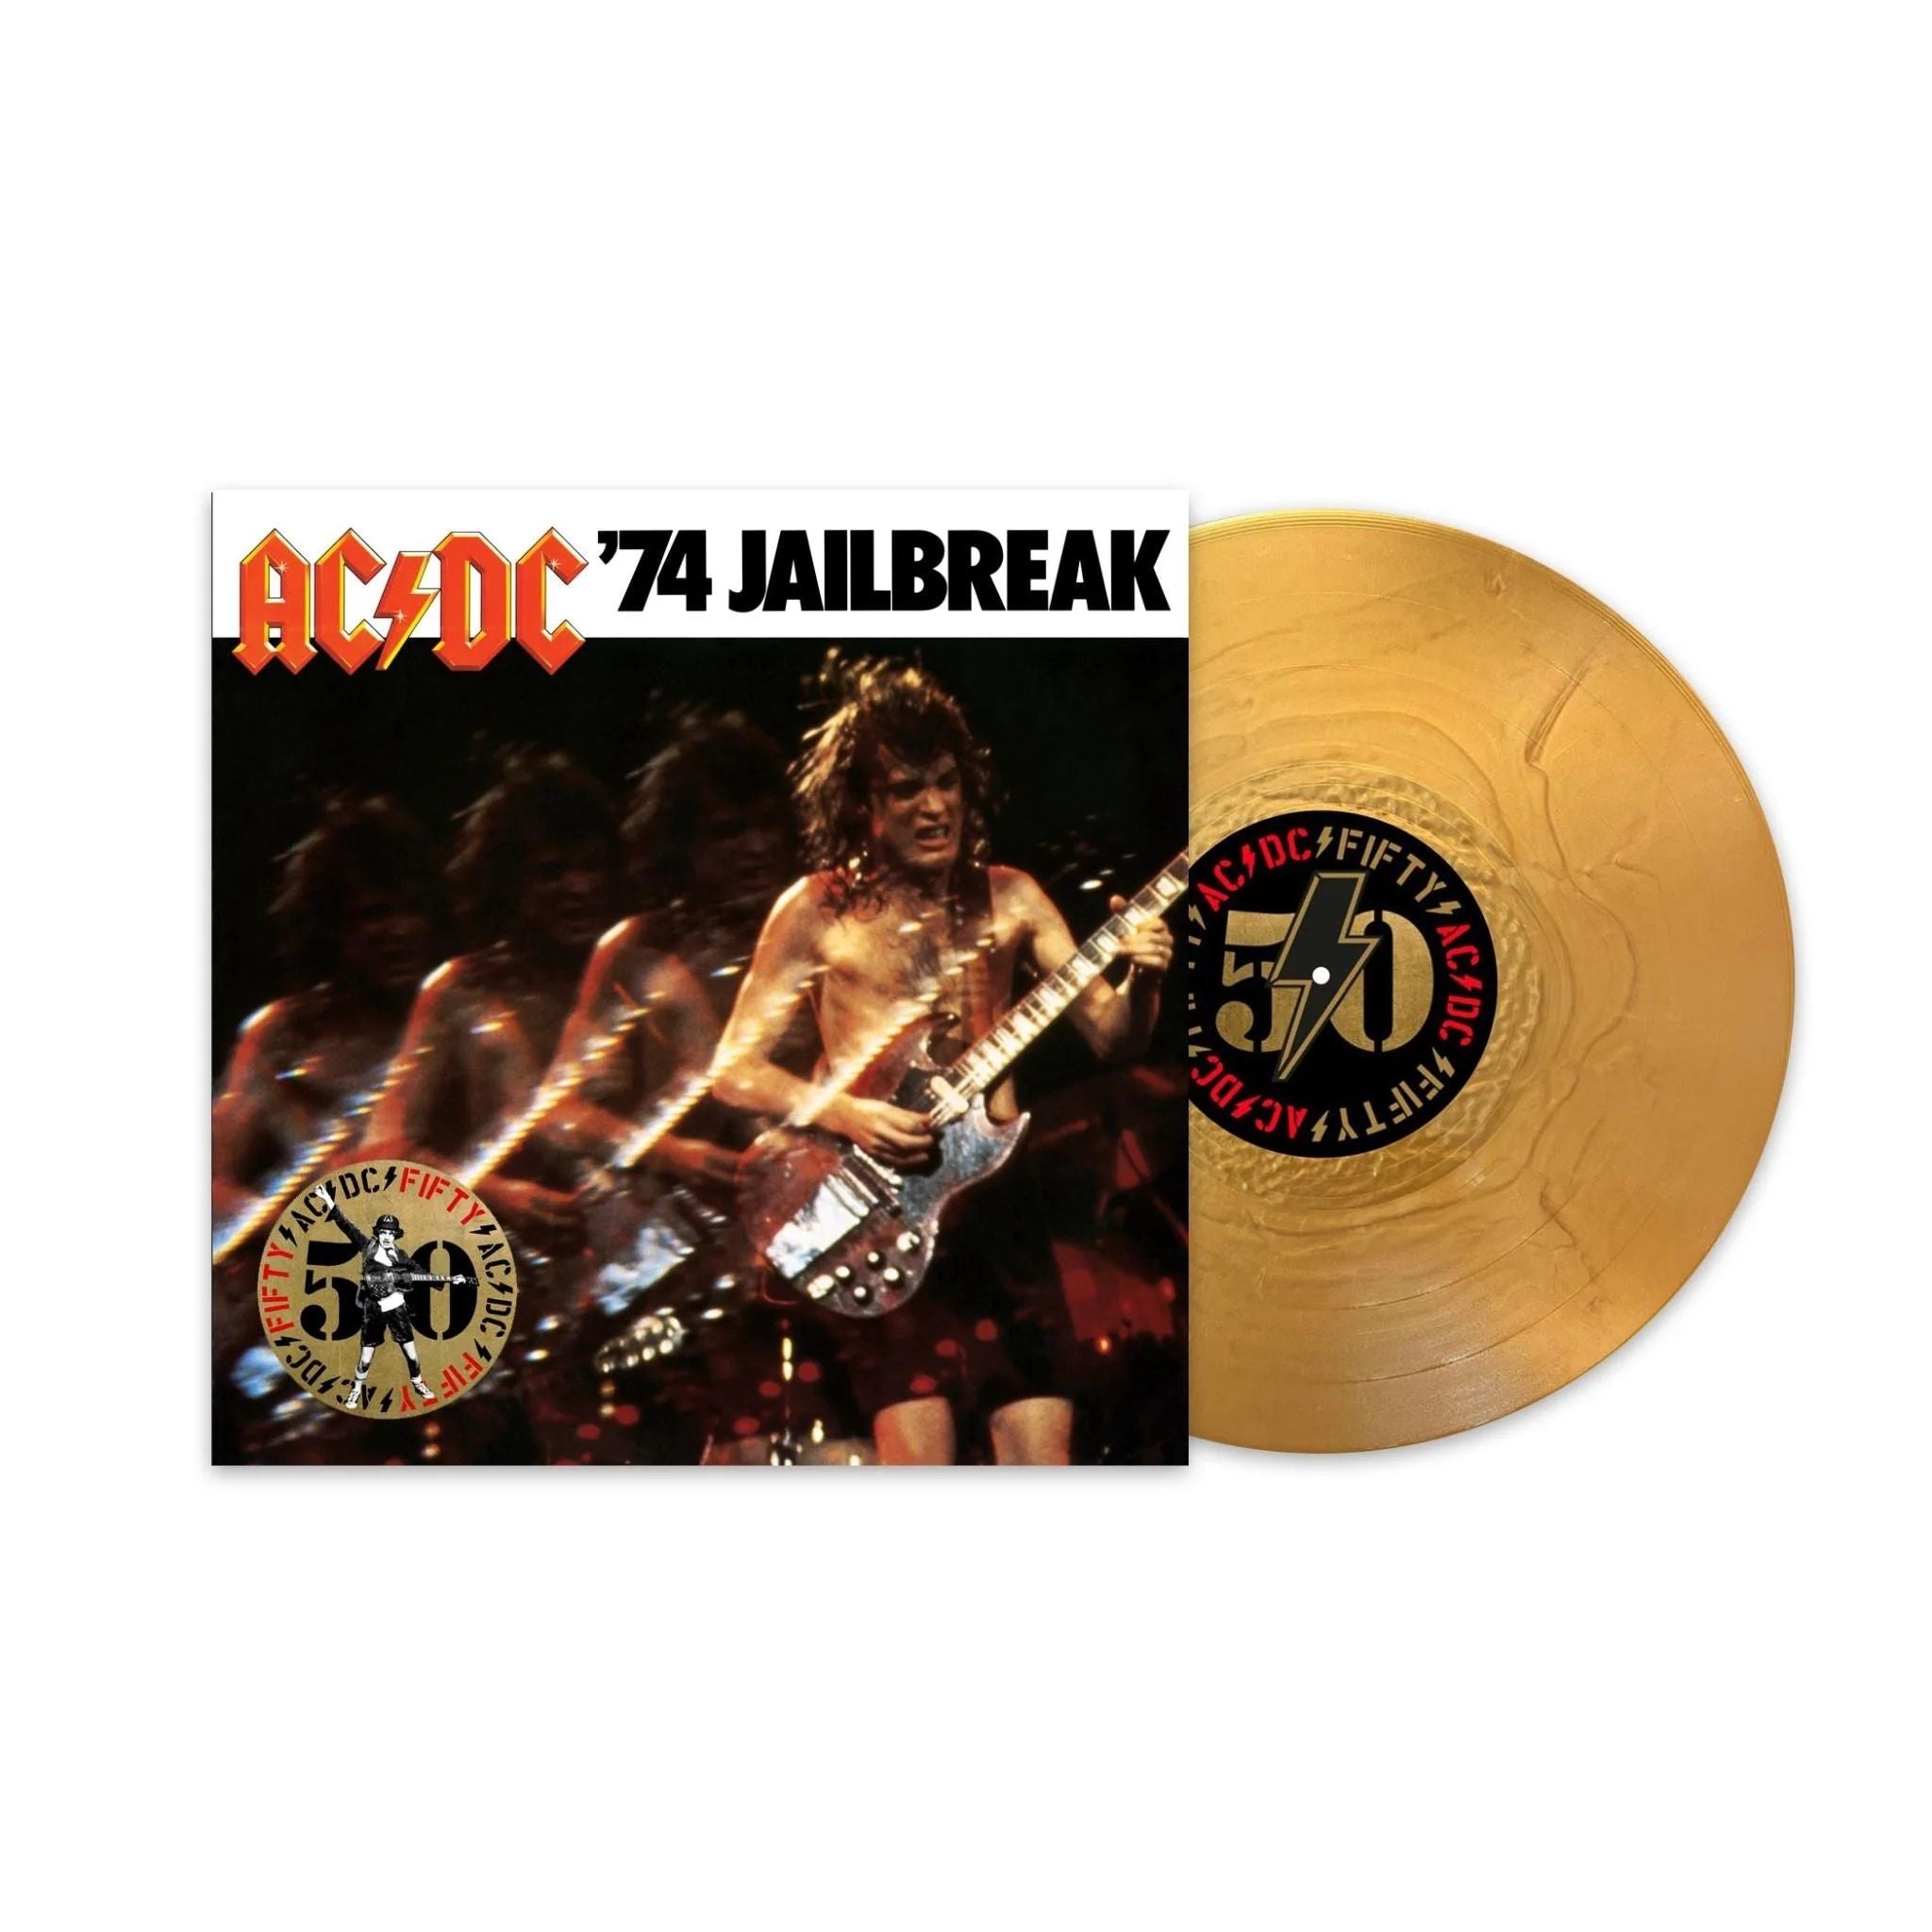 ACDC - 74 Jailbreak (50th Anniversary Special Ed. Gold vinyl reissue with insert) - Vinyl - New - PRE-ORDER